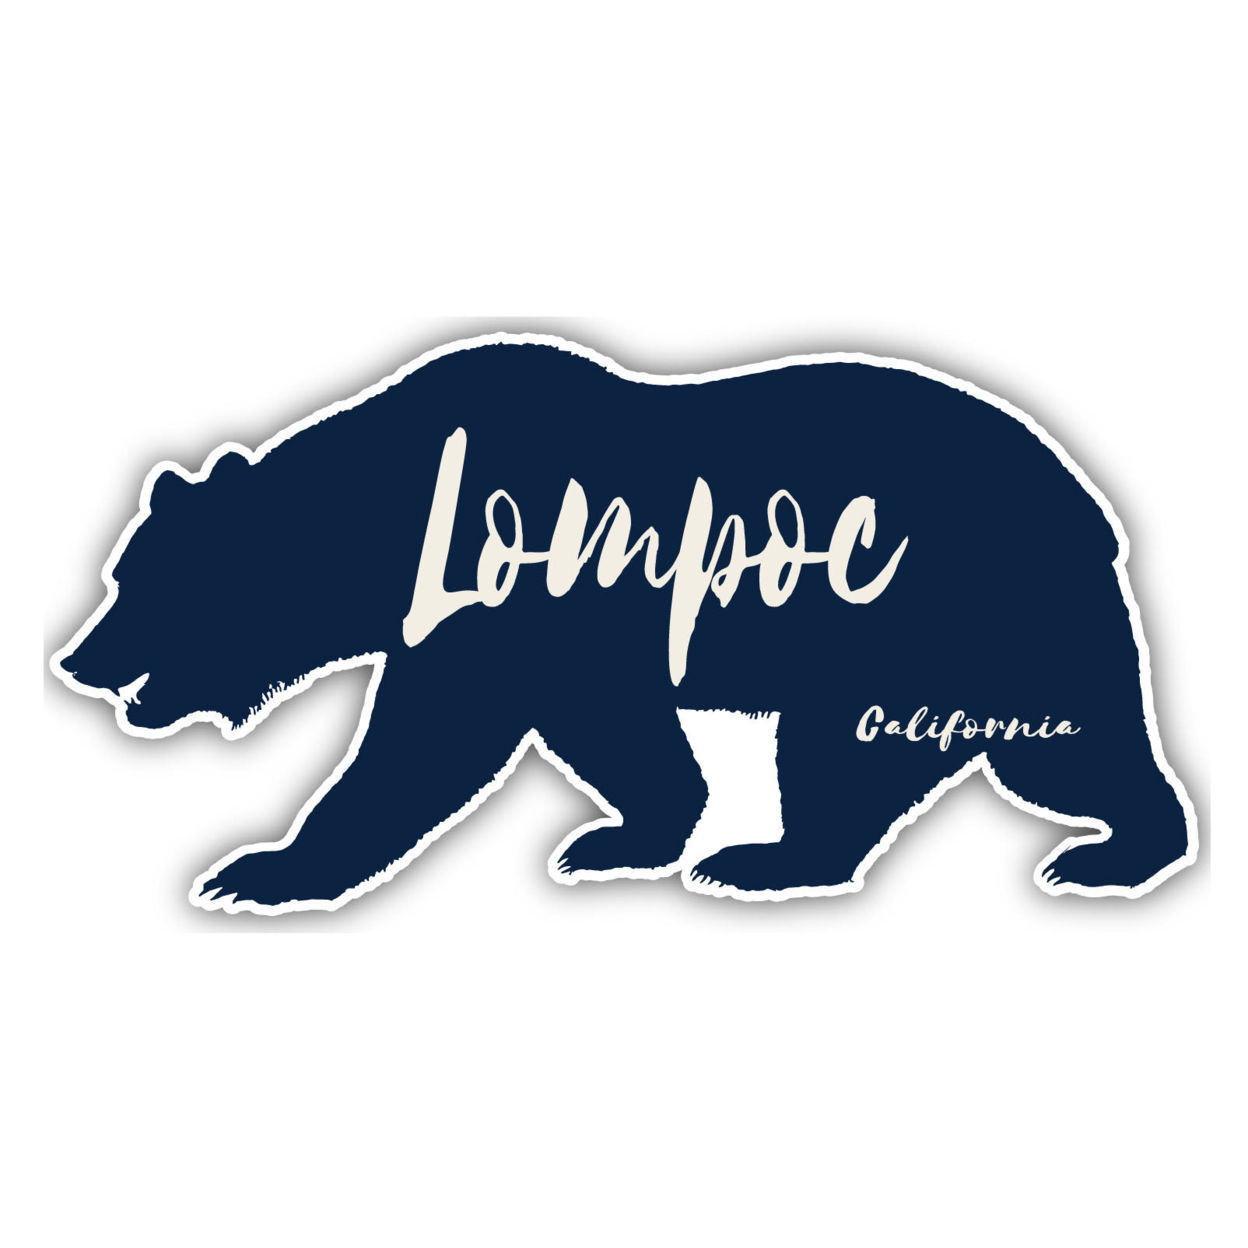 Lompoc California Souvenir Decorative Stickers (Choose Theme And Size) - 4-Inch, Bear